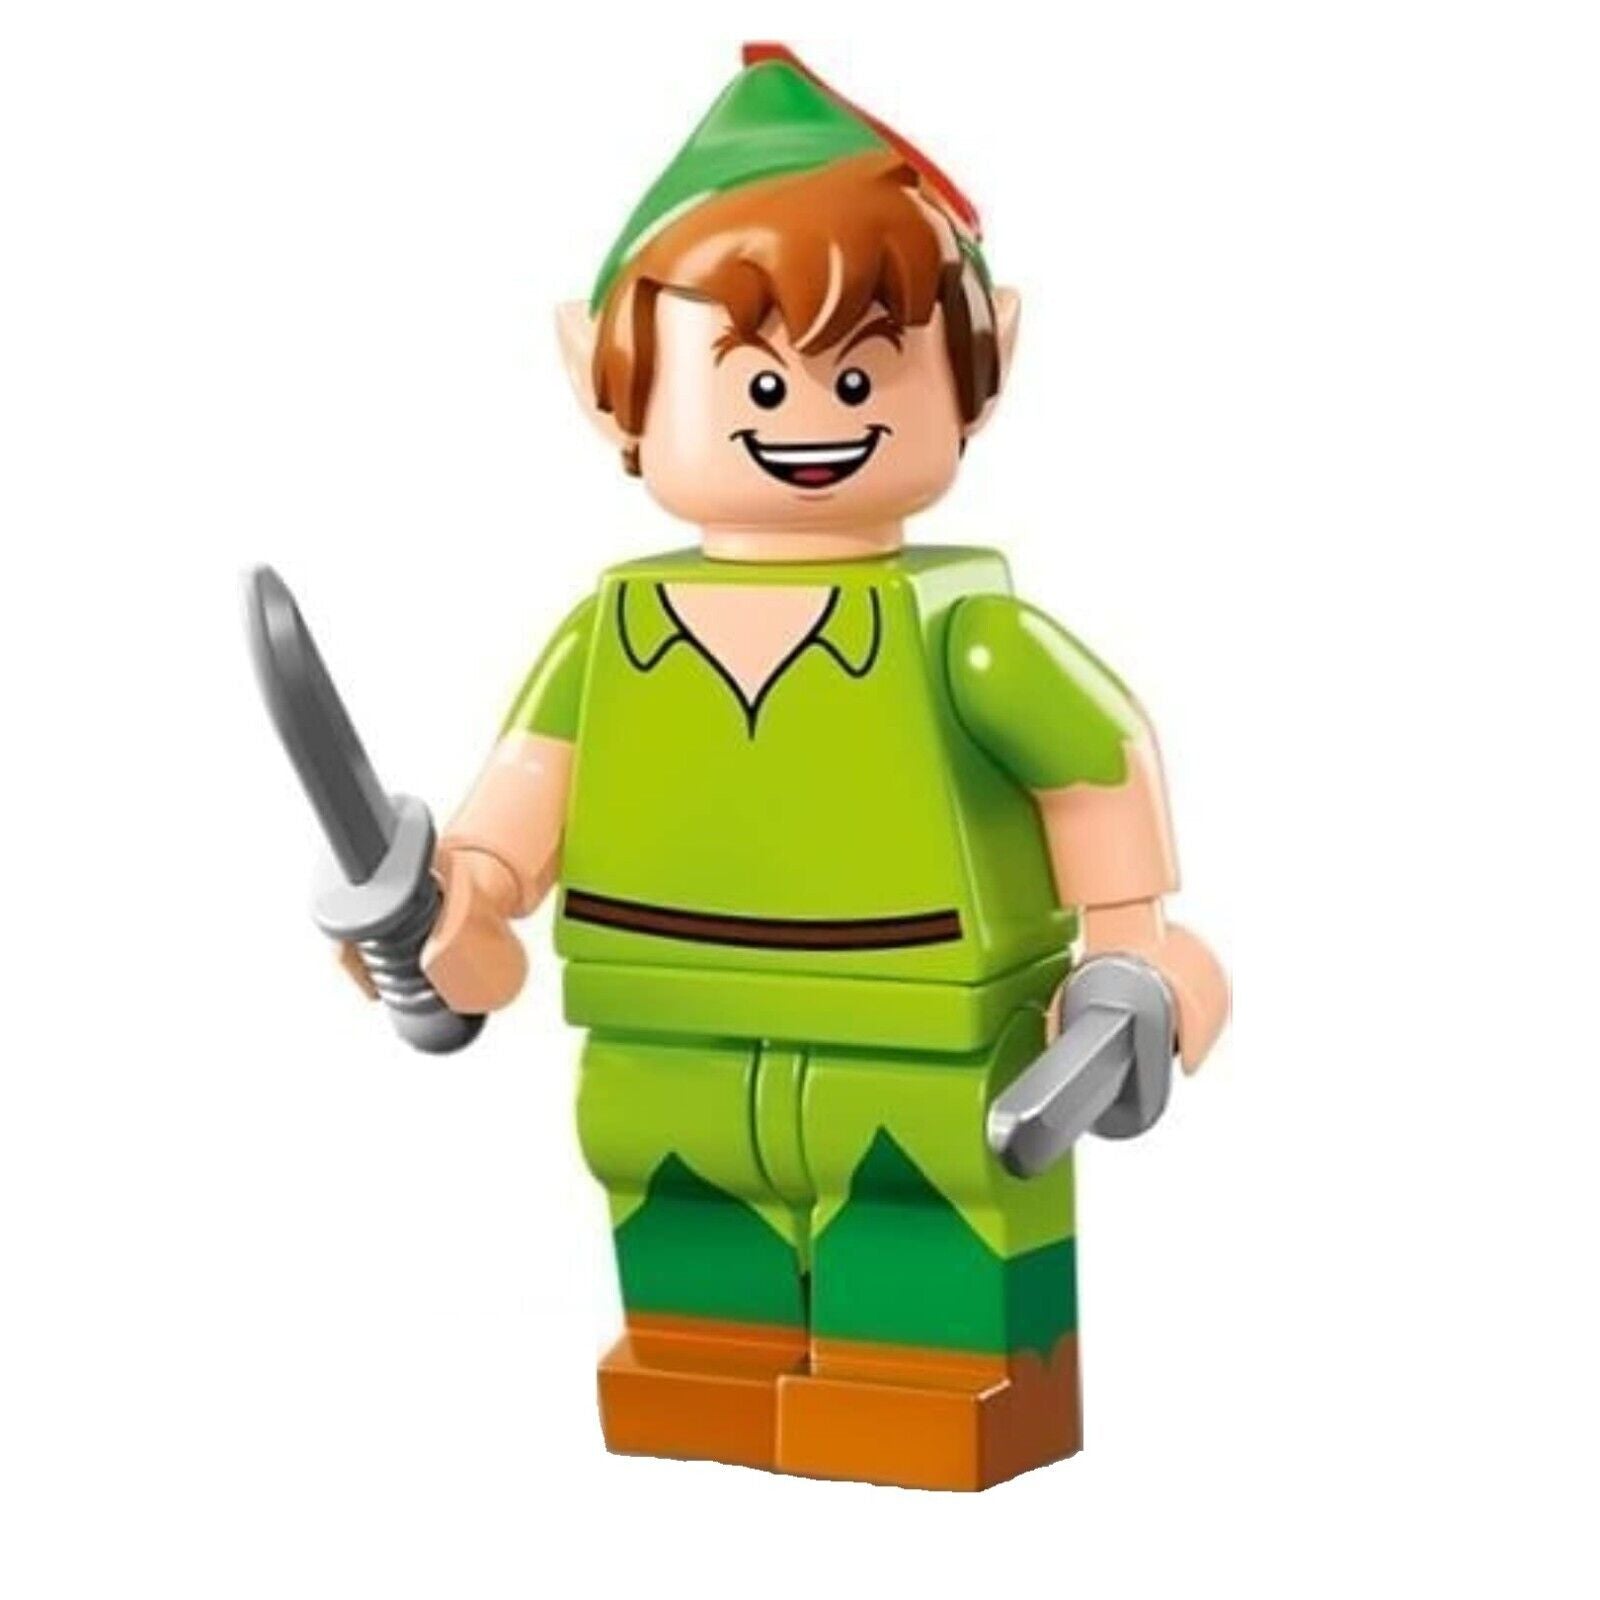 LEGO DISNEY Series 1 Collectible Minifigures 71012 - Stitch